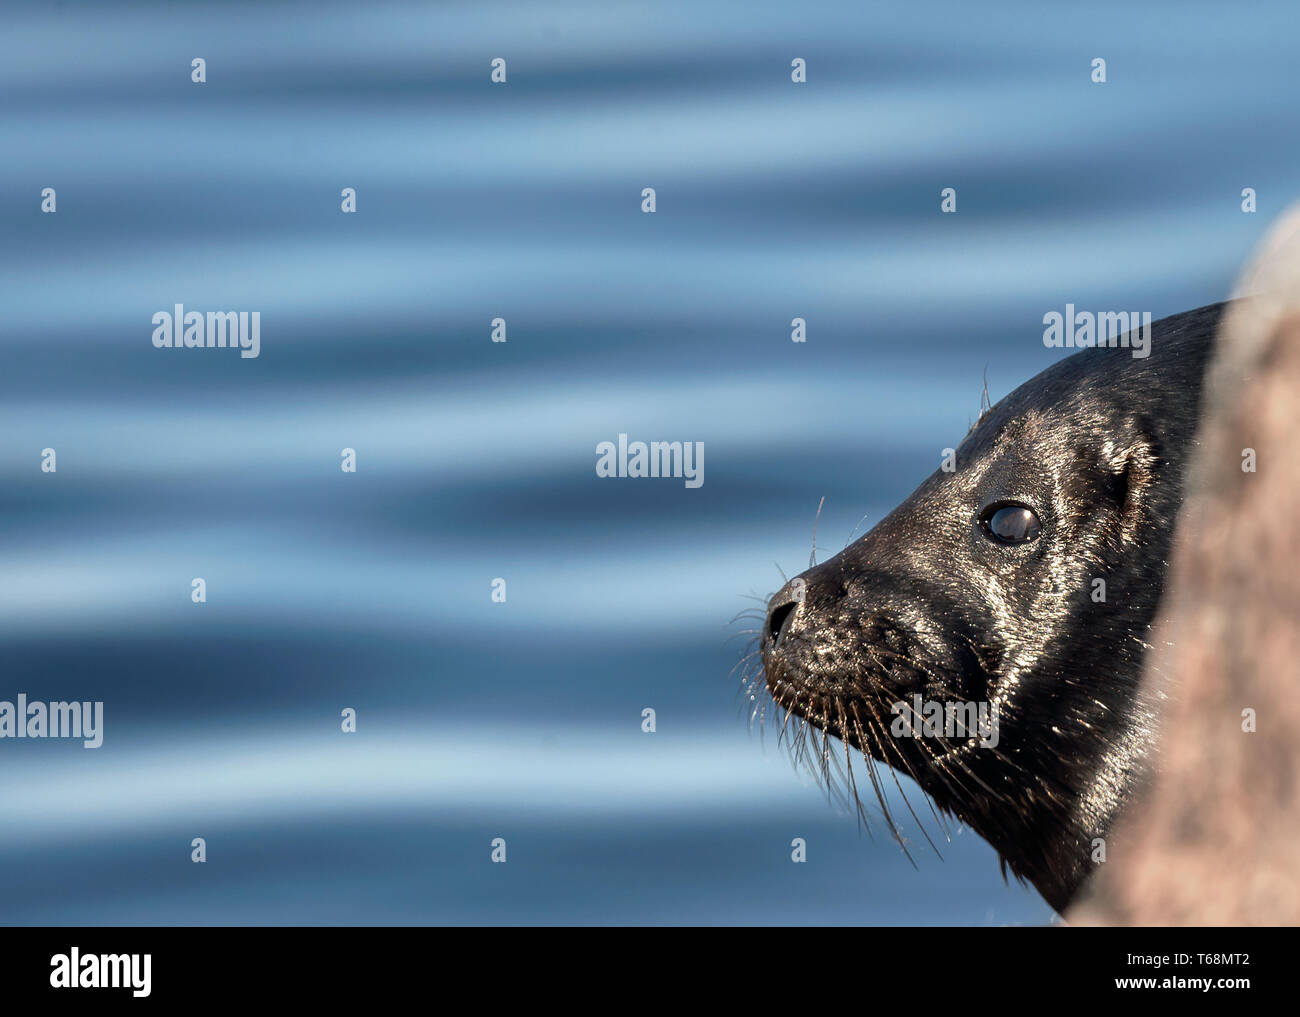 The Ladoga ringed seal. Side view portrait. Close up. Scientific name: Pusa hispida ladogensis. The Ladoga seal in a natural habitat. Ladoga Lake. Rus Stock Photo